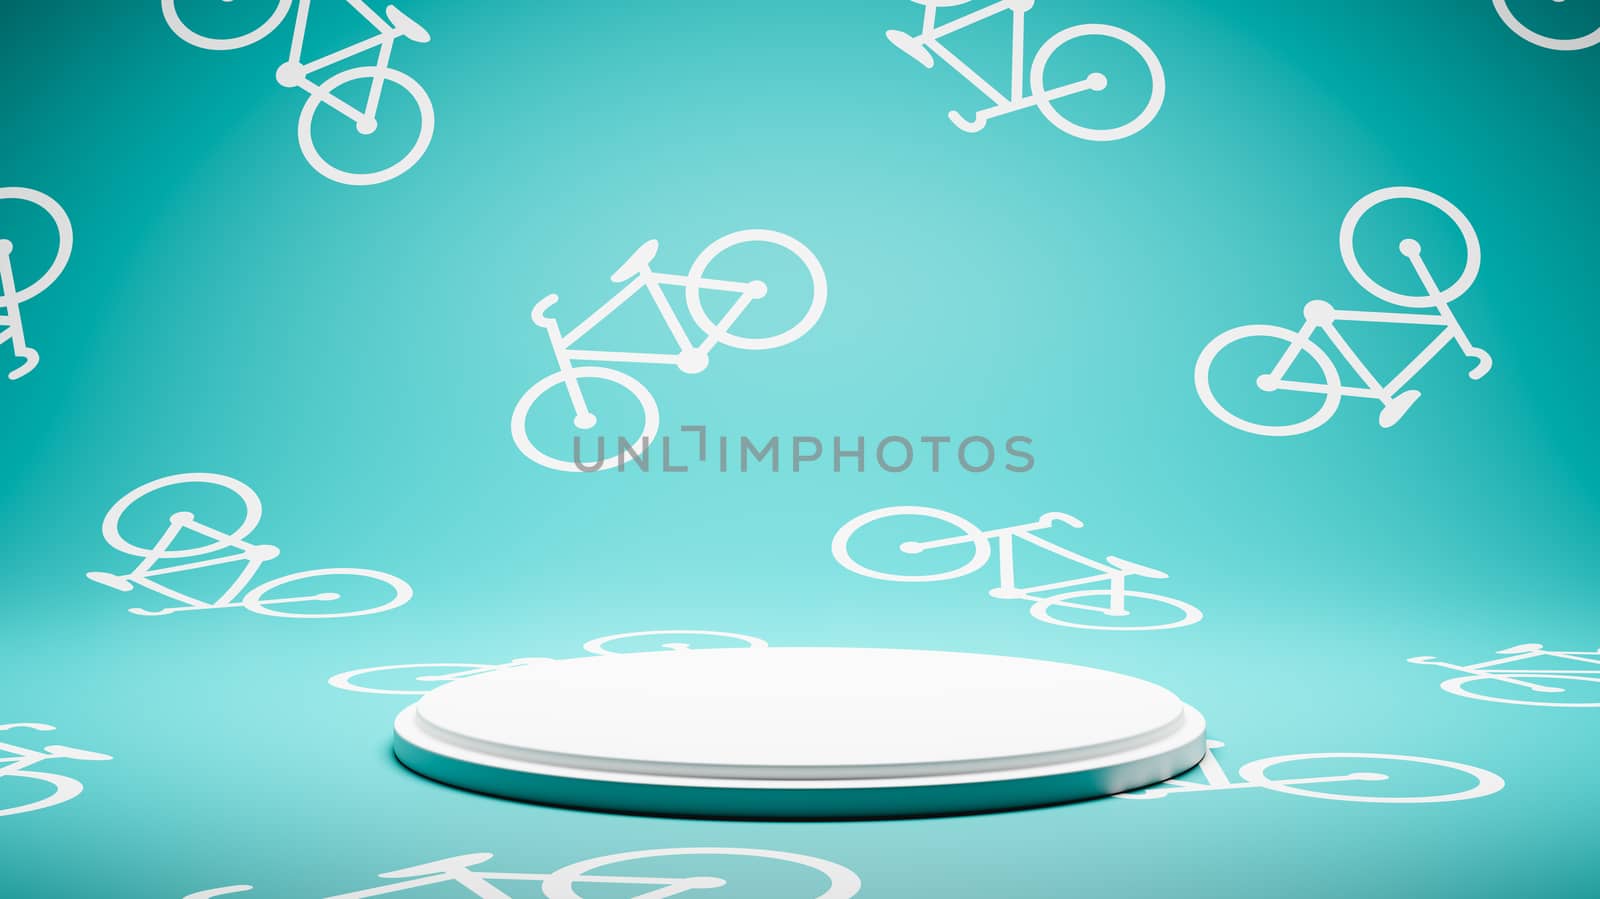 Empty White Platform on Blue and White Bicycle Pattern Studio Background 3D Render Illustration